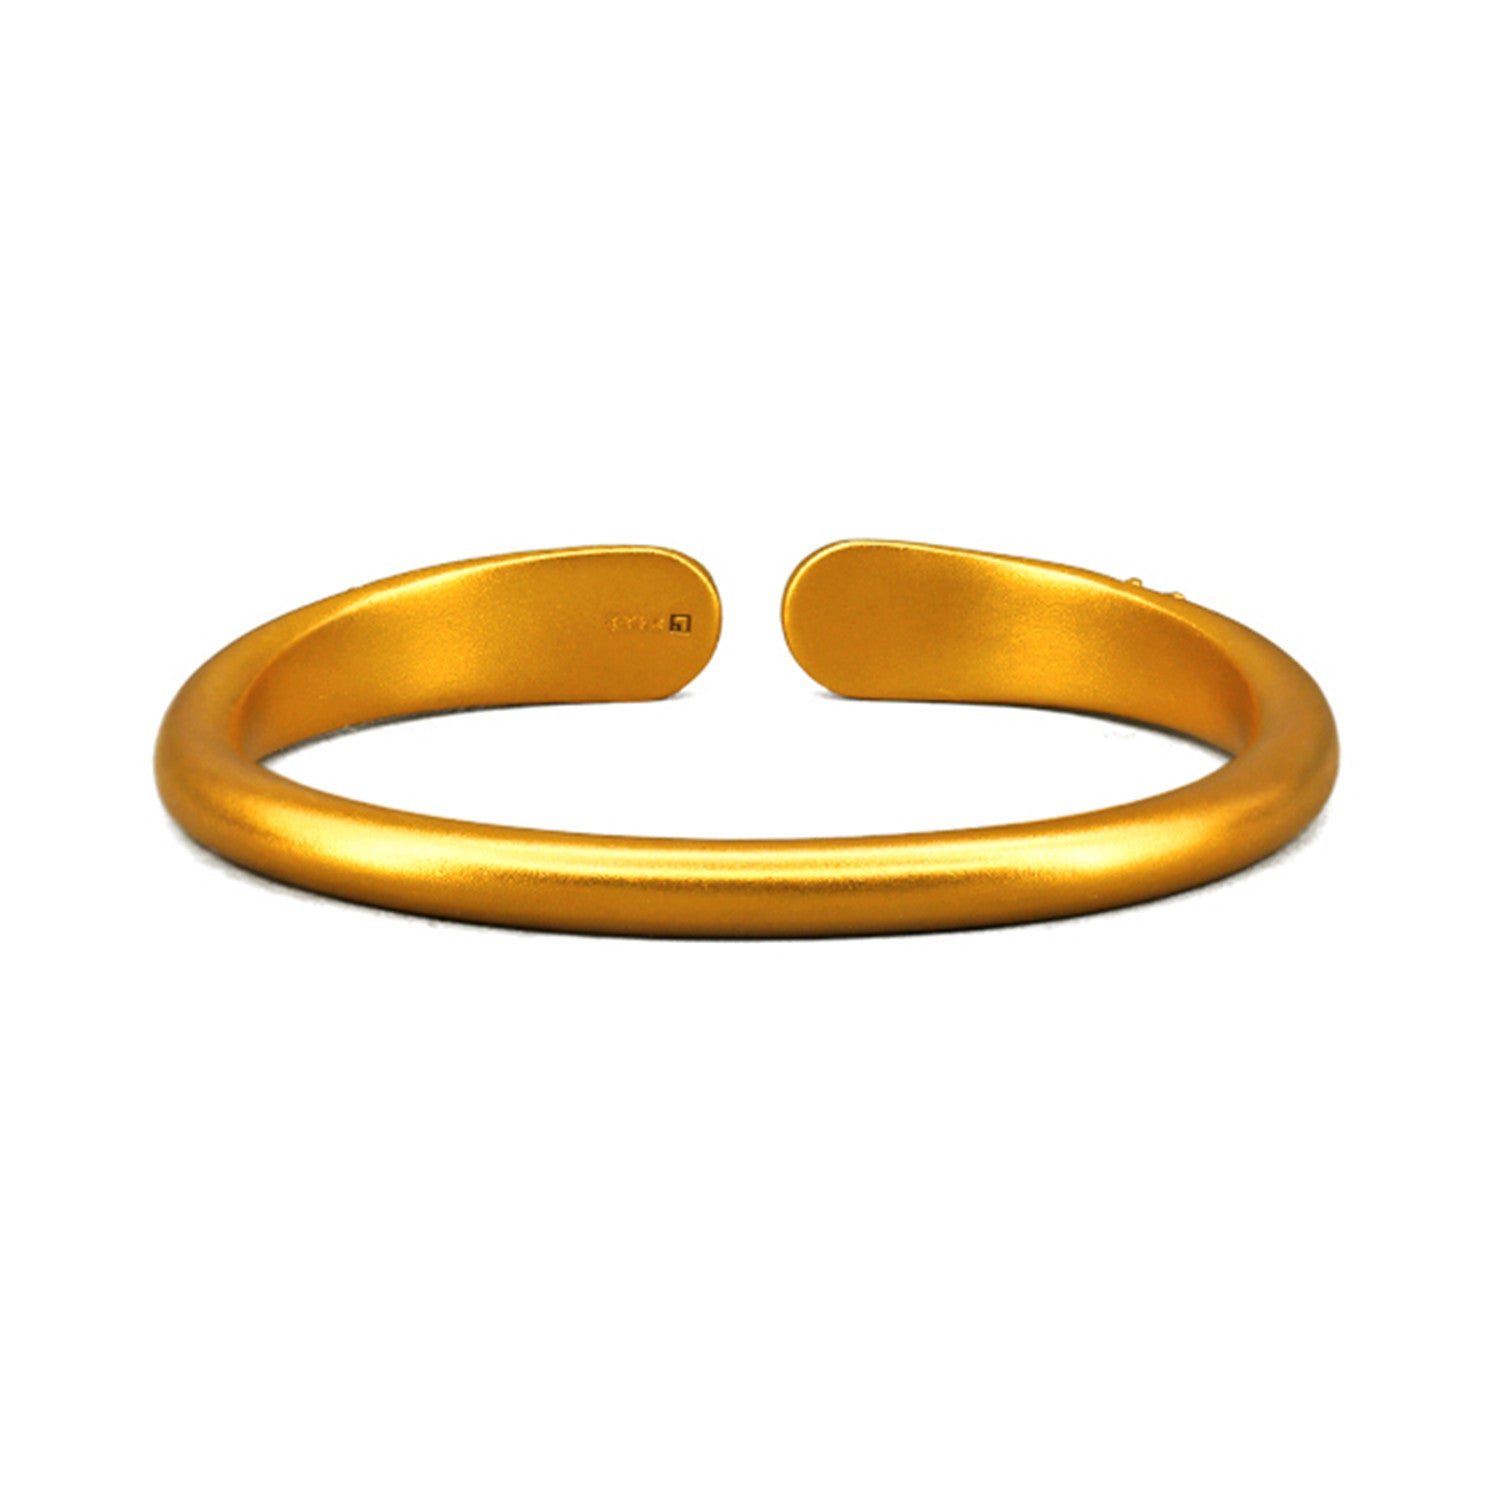 EVECOCO Full Gold Bracelet Hand Forging,Flat Wide Design,42g